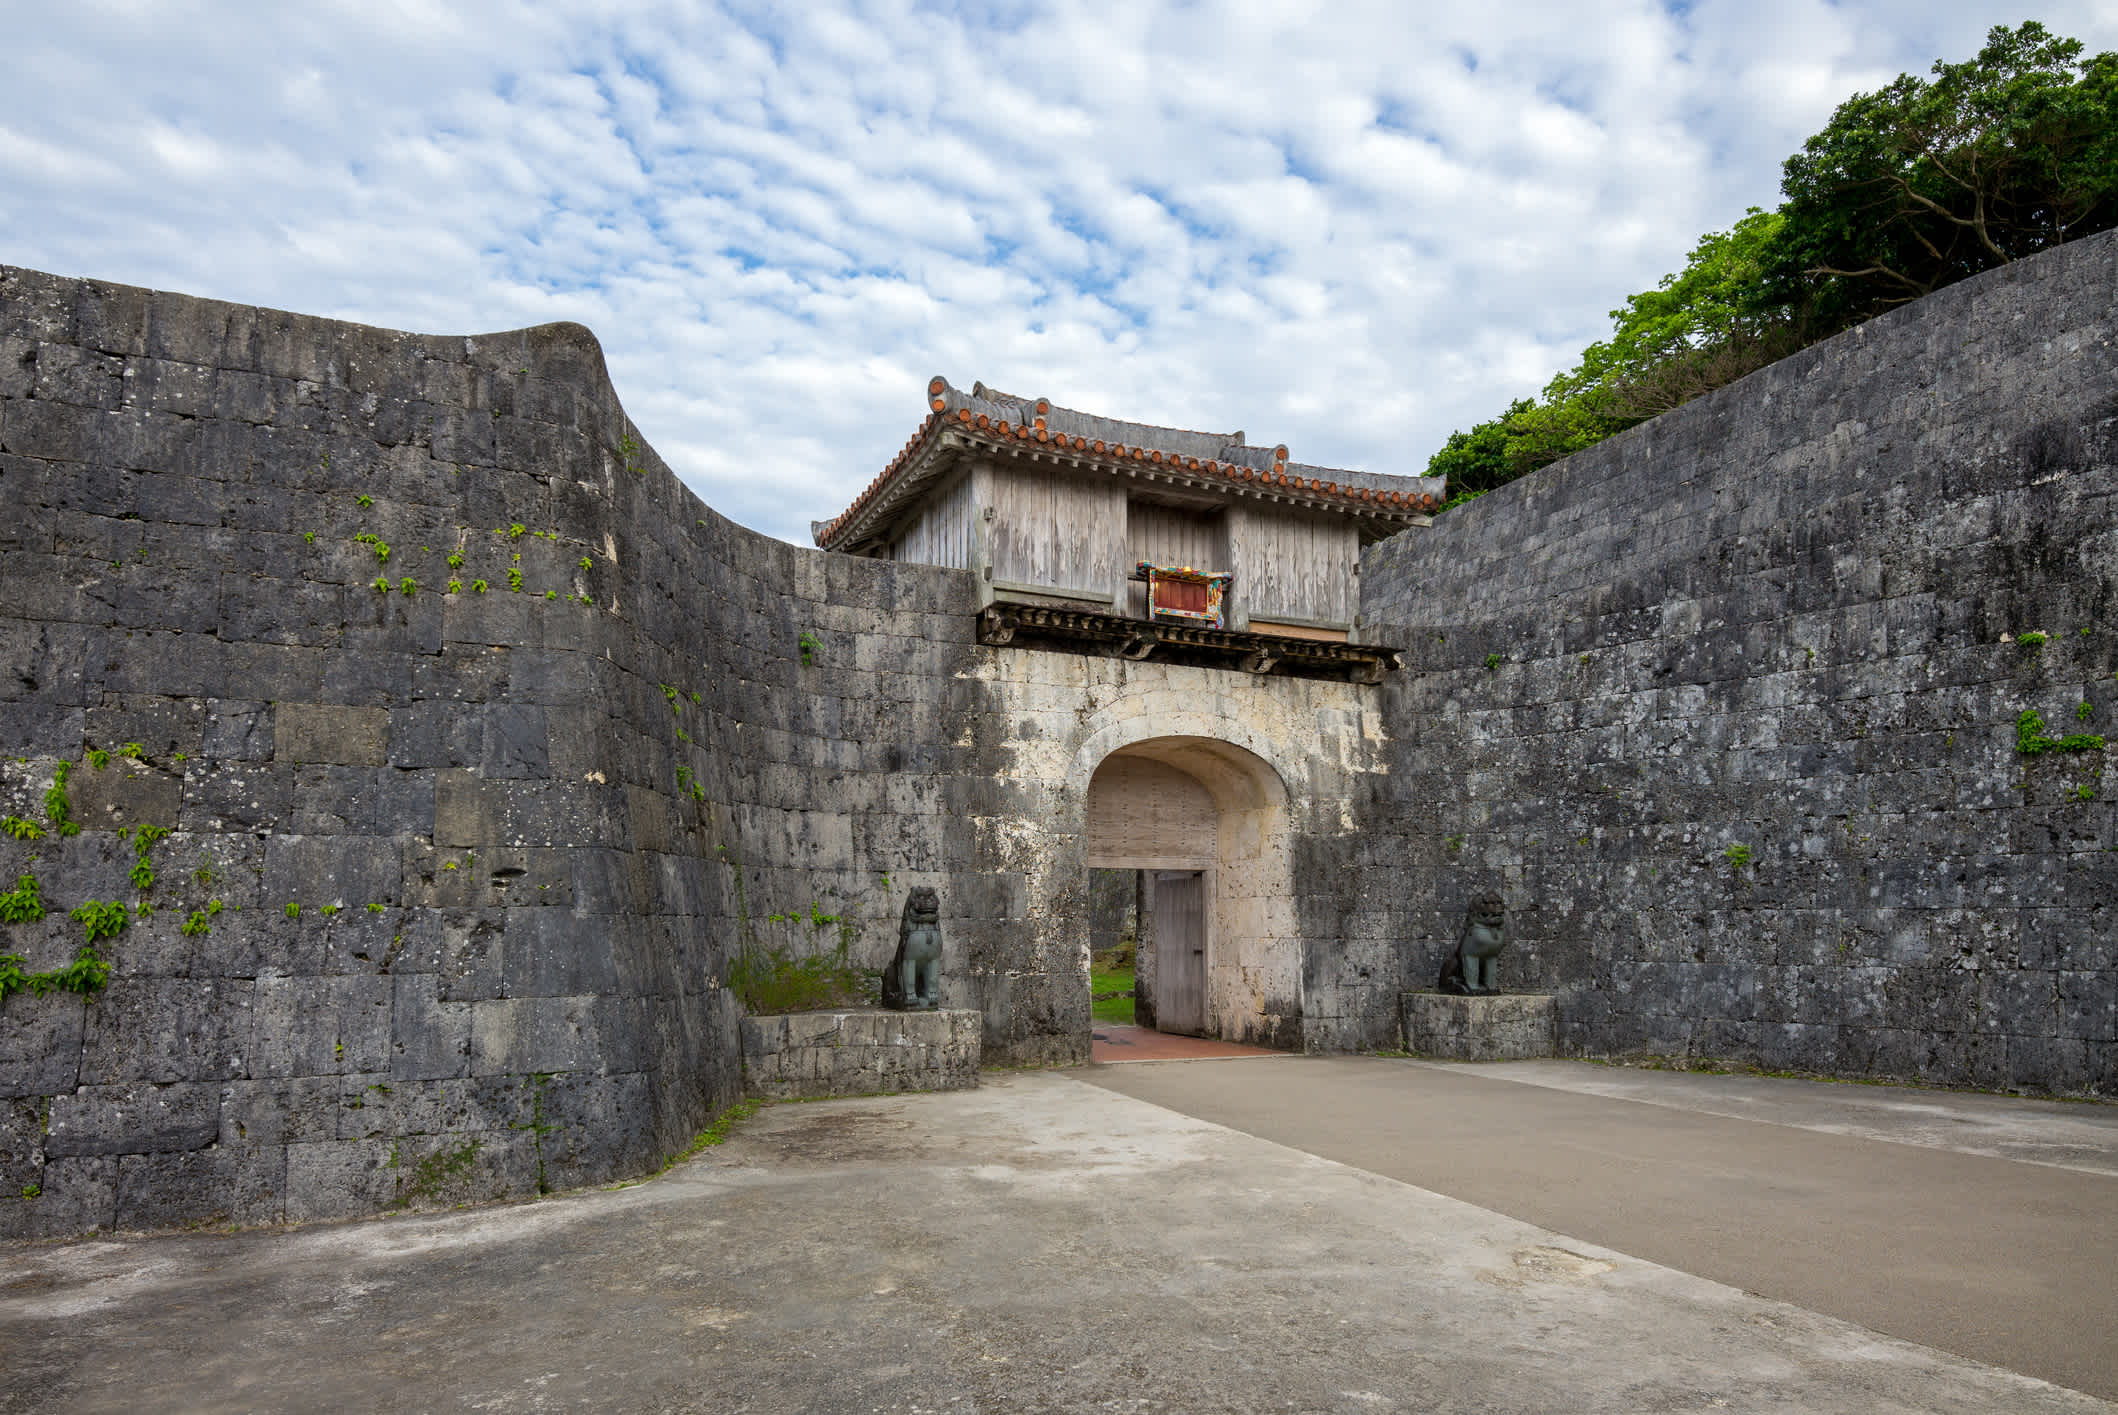 Porte de Kankaimon, la première porte principale du château de Shuri, Okinawa, Japon.

